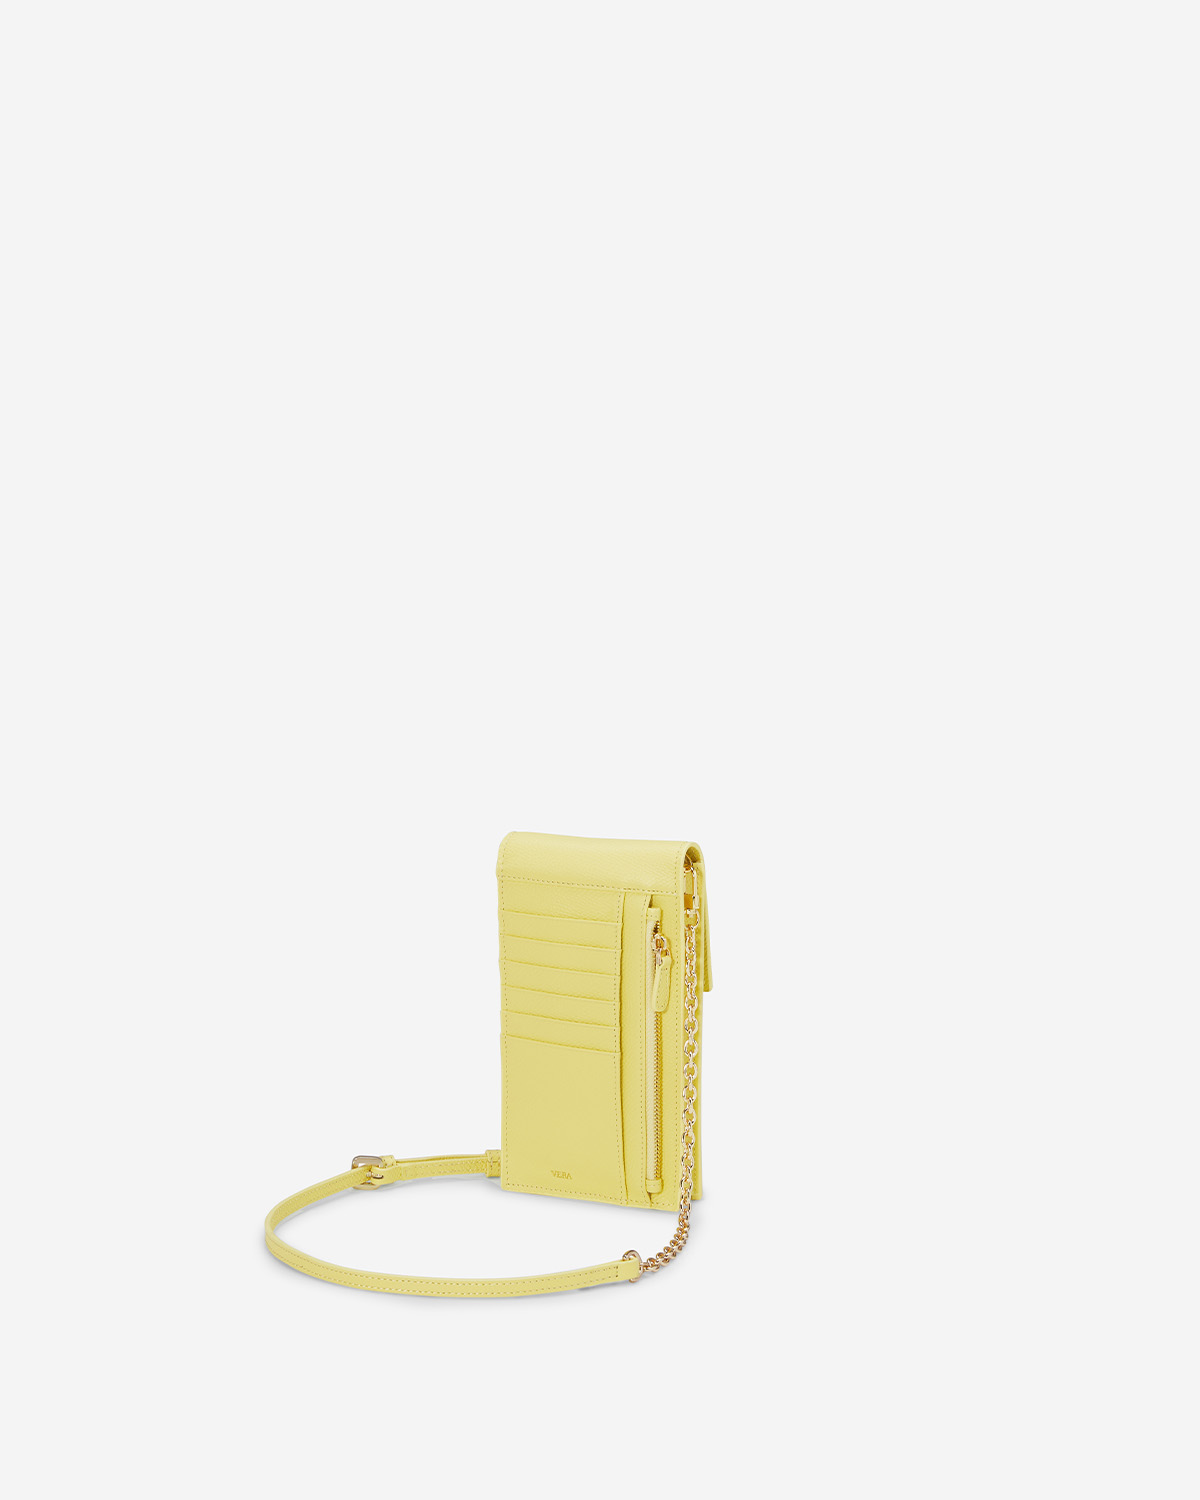 VERA Emily Phone Pouch with Leather Gold Chain in Happy Yellow กระเป๋าใส่โทรศัพท์หนังแท้ พร้อมฟังก์ชั่นกระเป๋าสตางค์ มาพร้อมสายสะพายโซ่หนังถอดได้ สีเหลือง